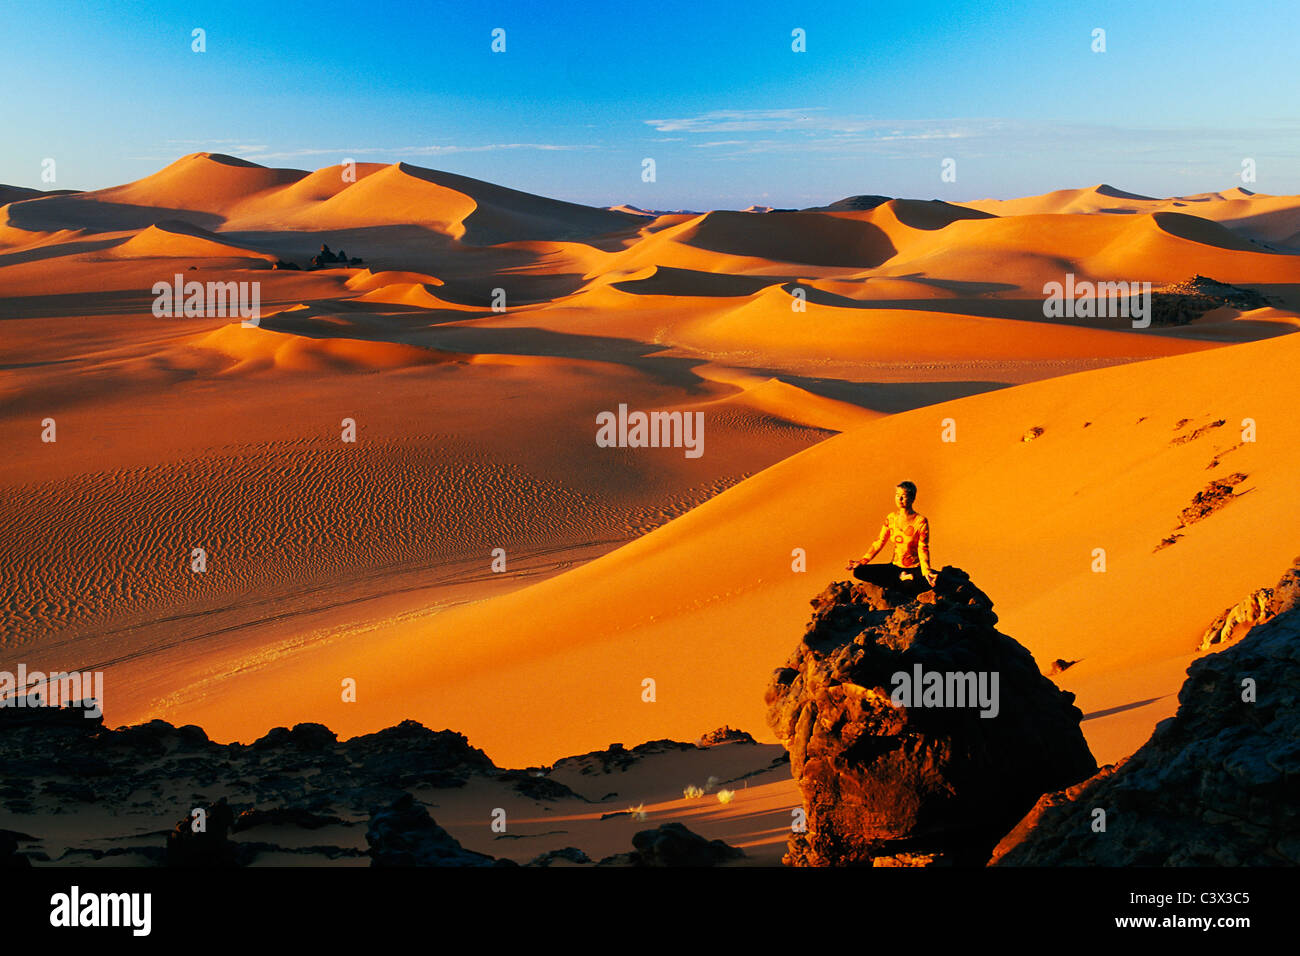 Algeria, Djanet. Sand dunes and rocks. Woman meditating. Sahara Desert. Stock Photo